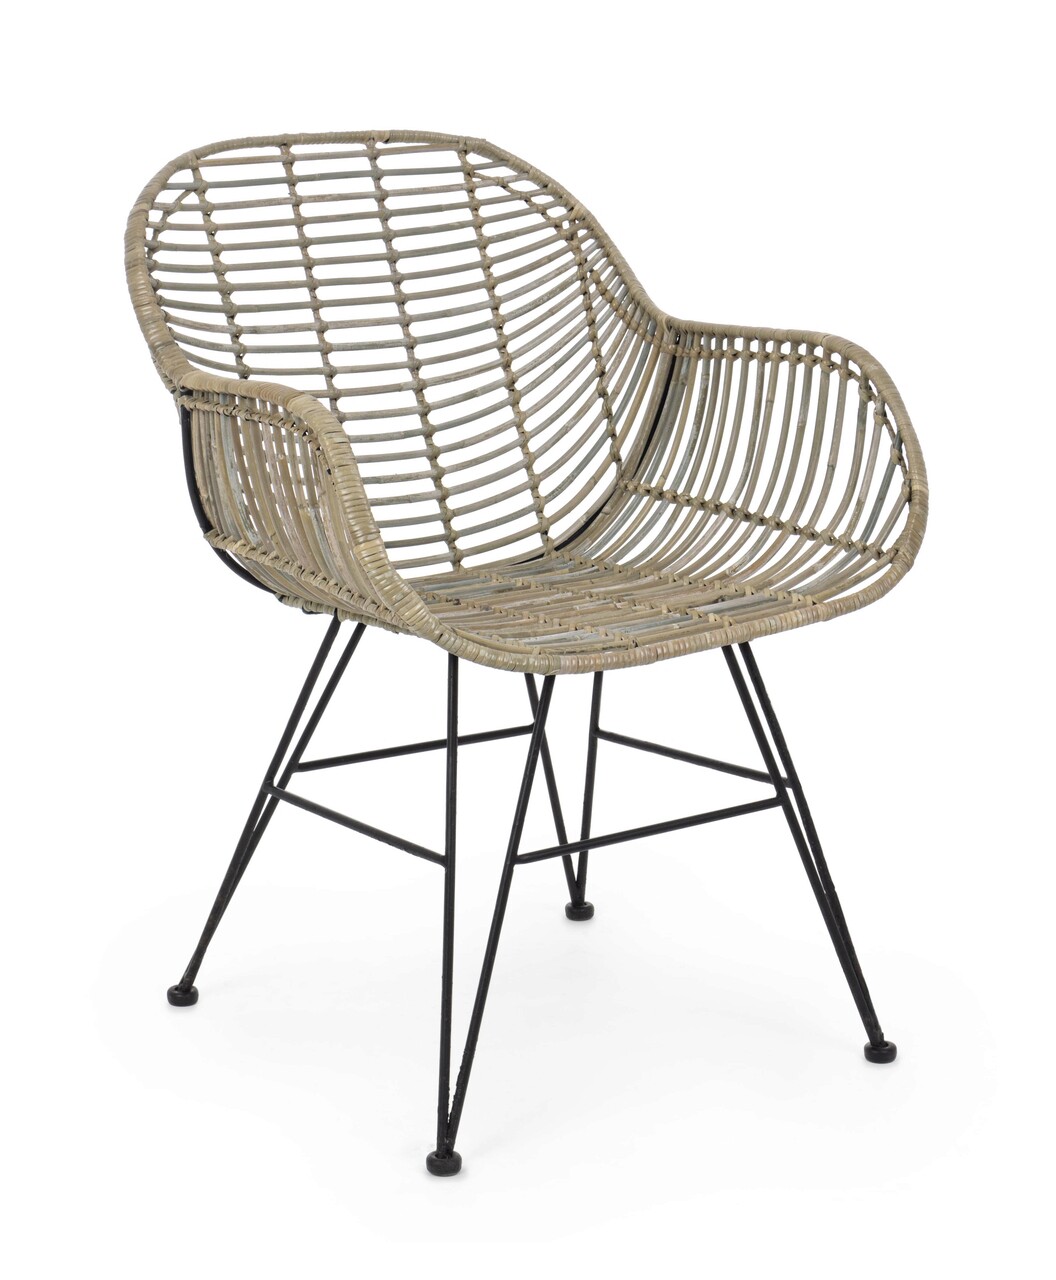 Raquel kerti szék, bizzotto, 59 x 63 x 83 cm, acél/kubu fonat